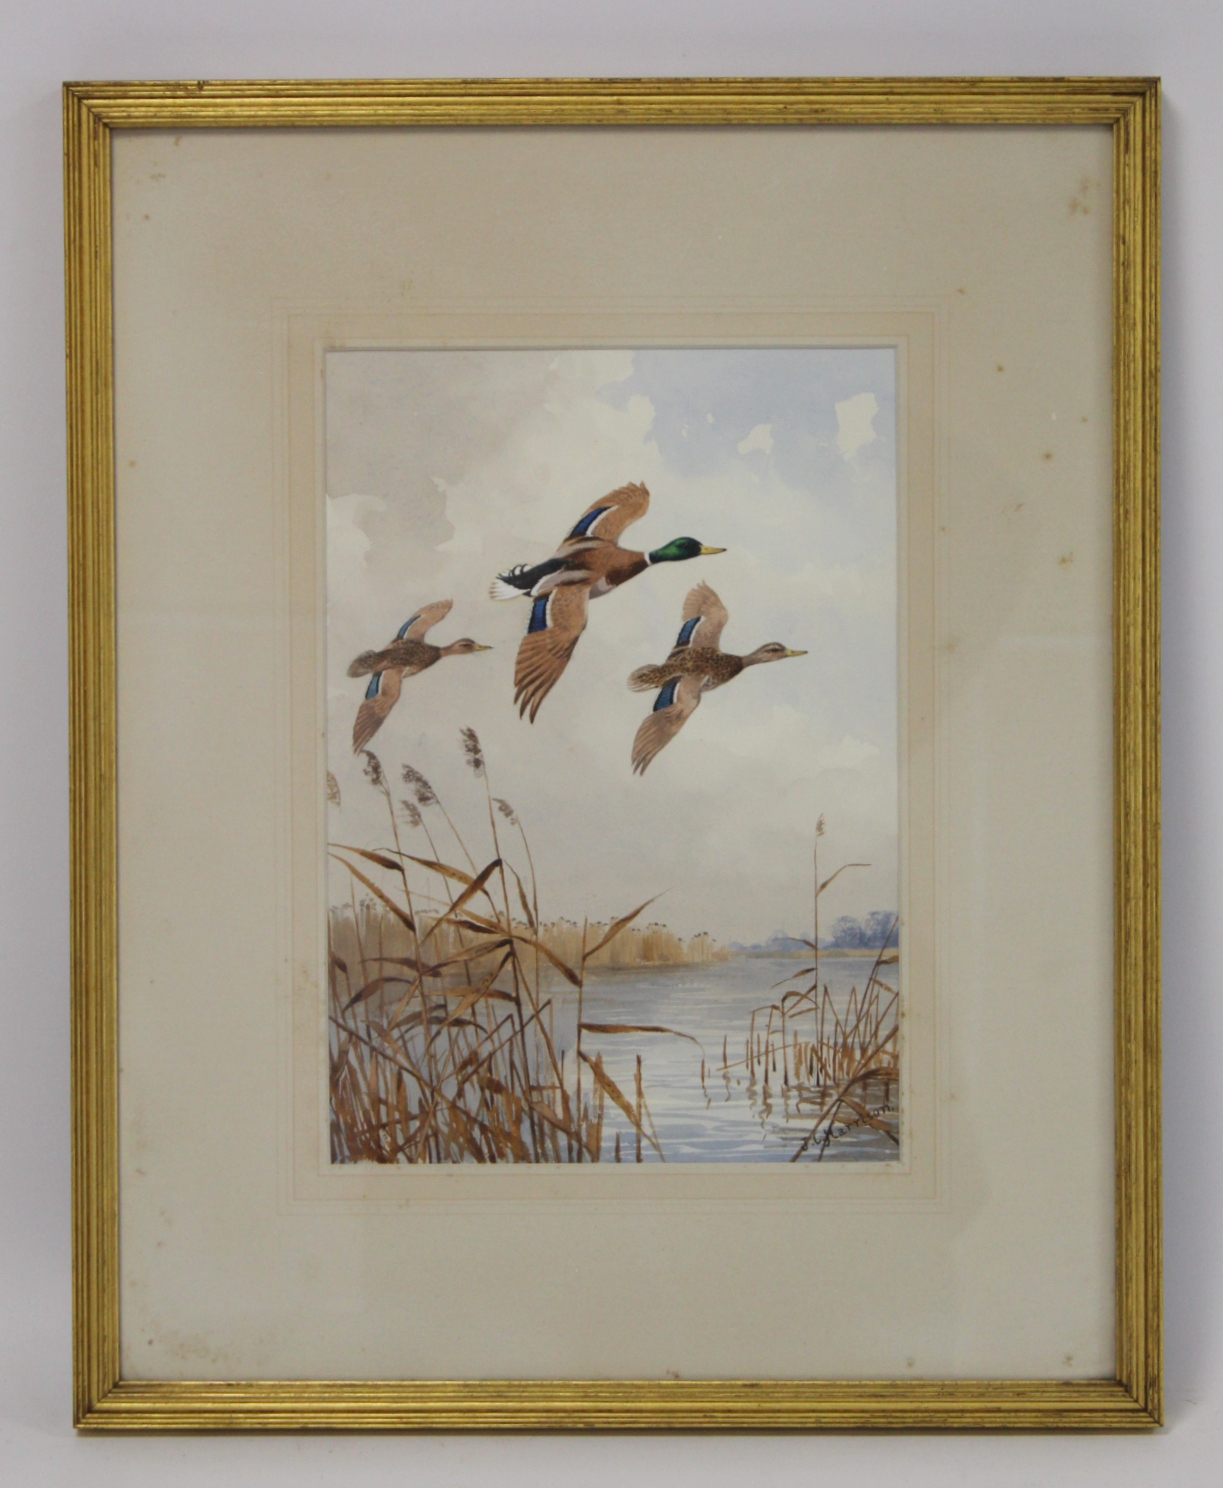 John Cyril Harrison (1898-1985).   "Over the broad - (Mallard)" - ducks in flight. Watercolour. 52.